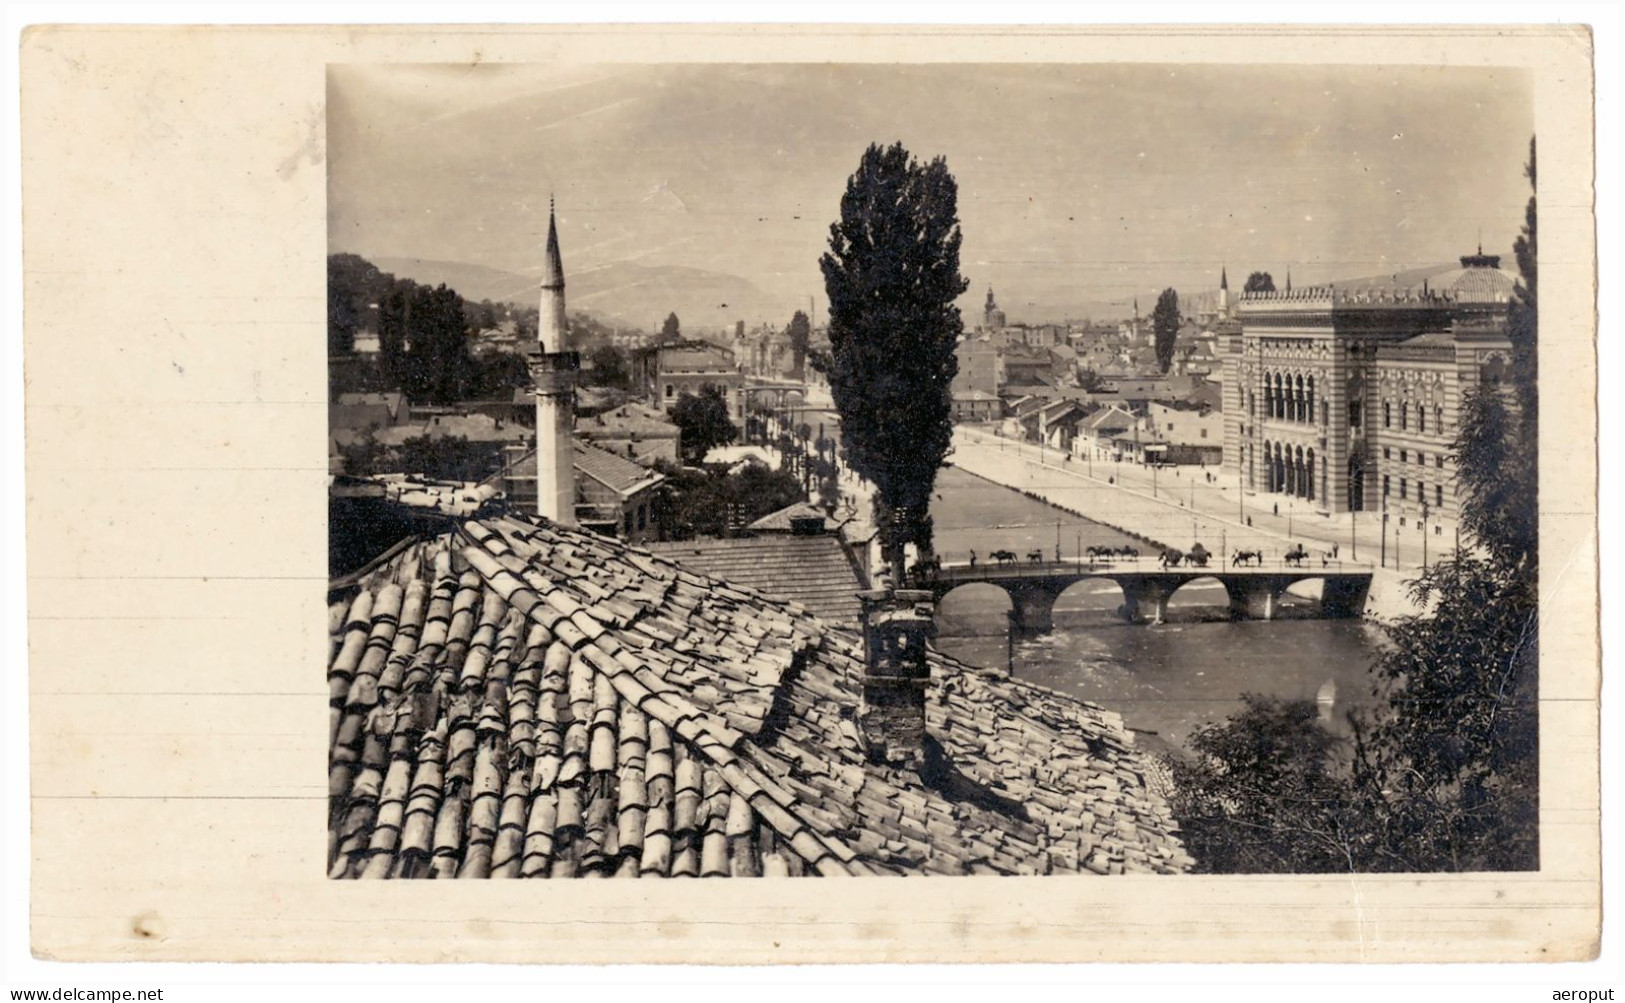 1949 Sarajevo / Bosnia / Postage Due, Stampless 'T' Postcard - Na Teret Primaoca - Real Photo (RPPC) - Bosnia Y Herzegovina